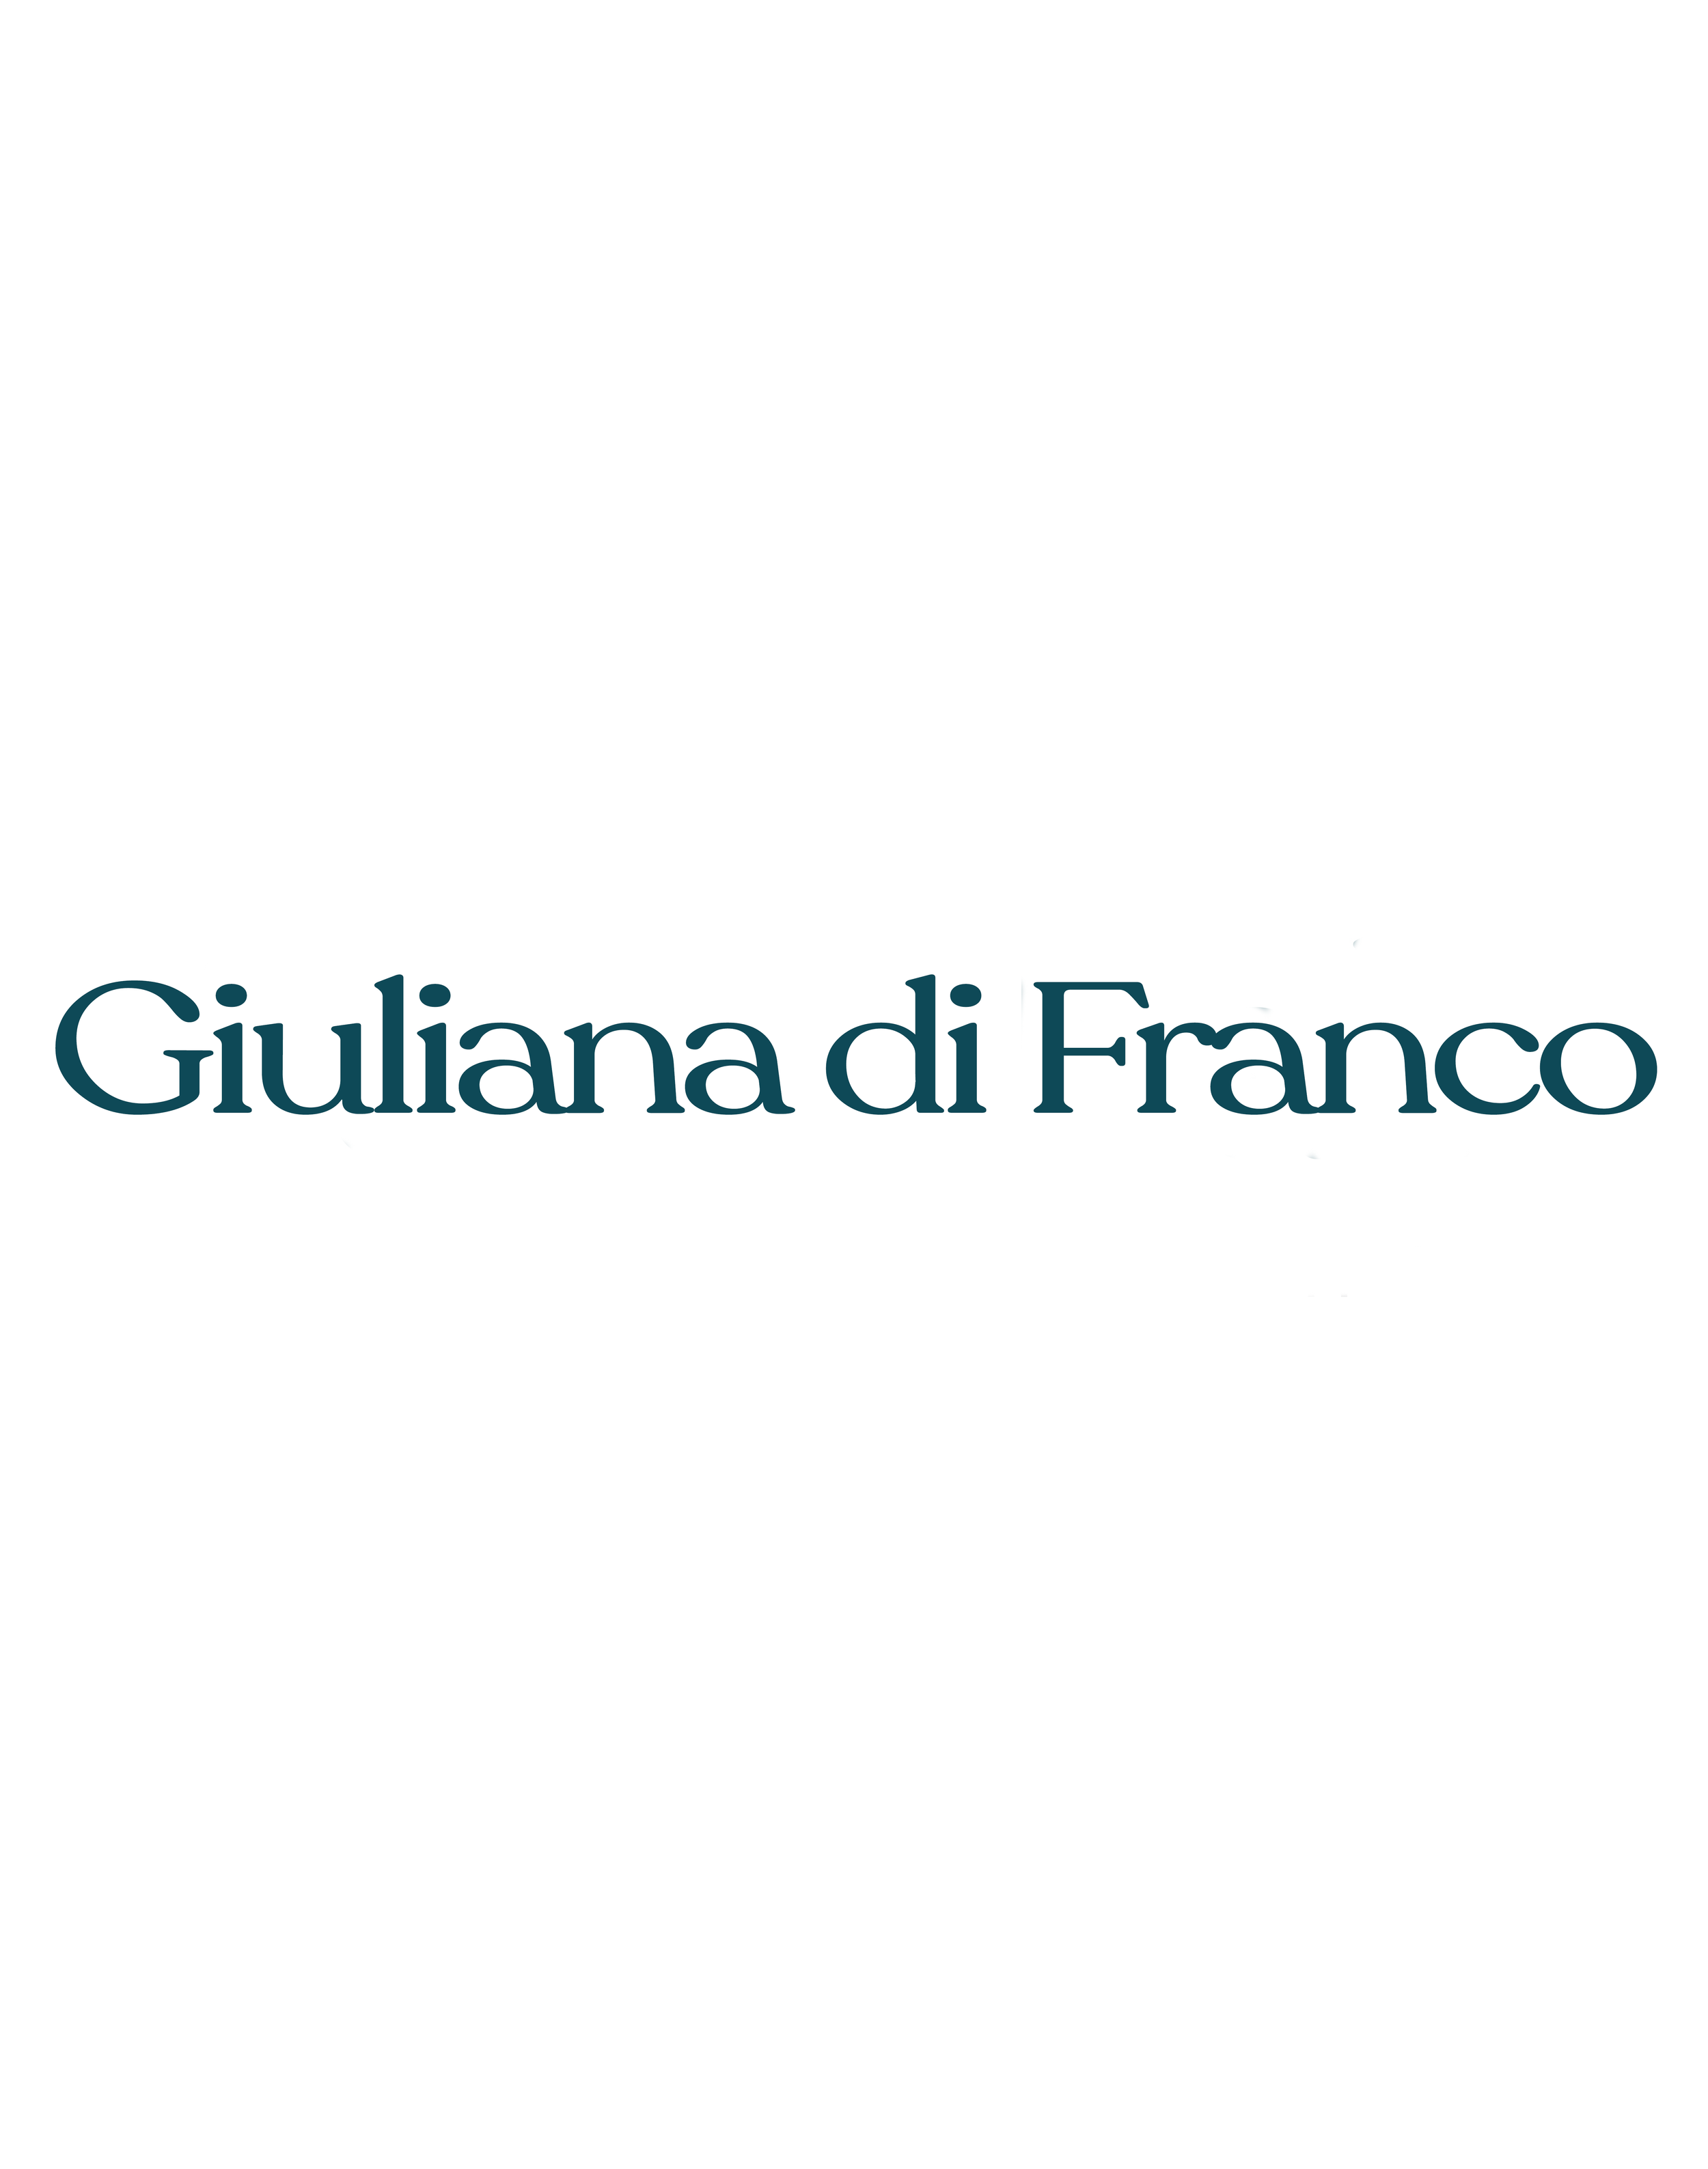 Giuliana Di franc o.png